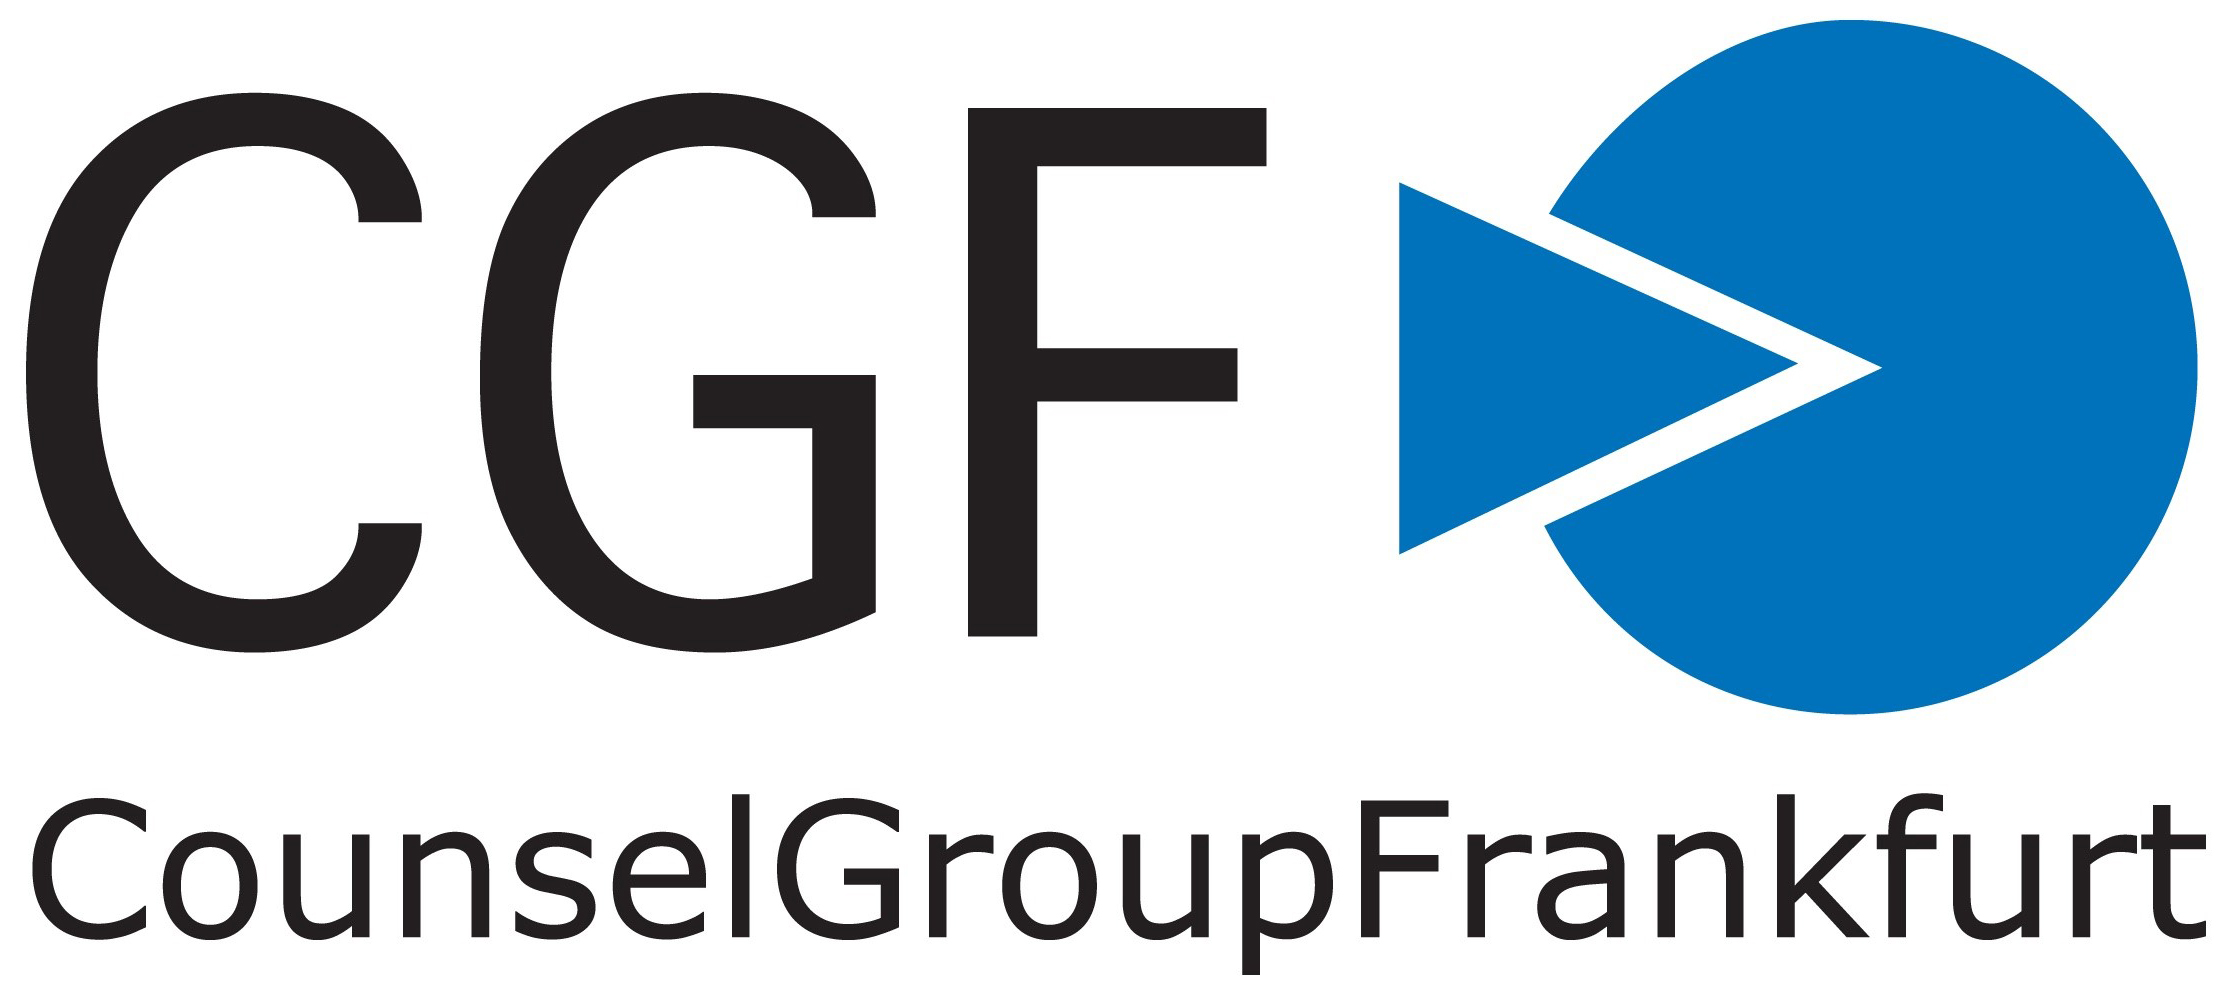 Counsel Group Frankfurt logo